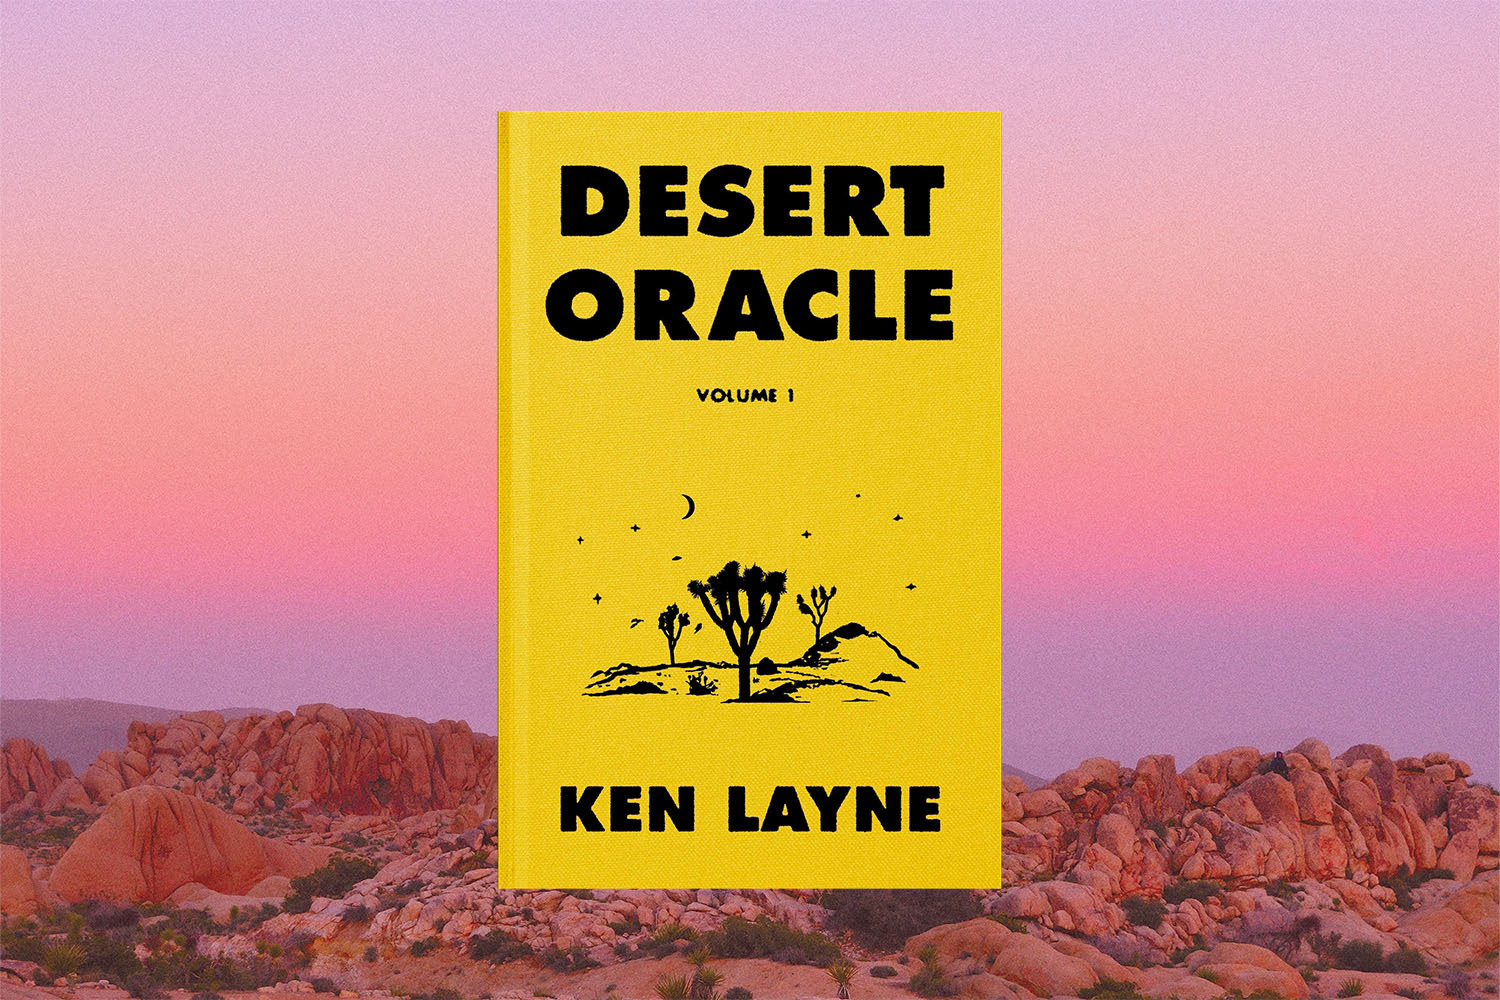 Ken Layne's Desert Oracle